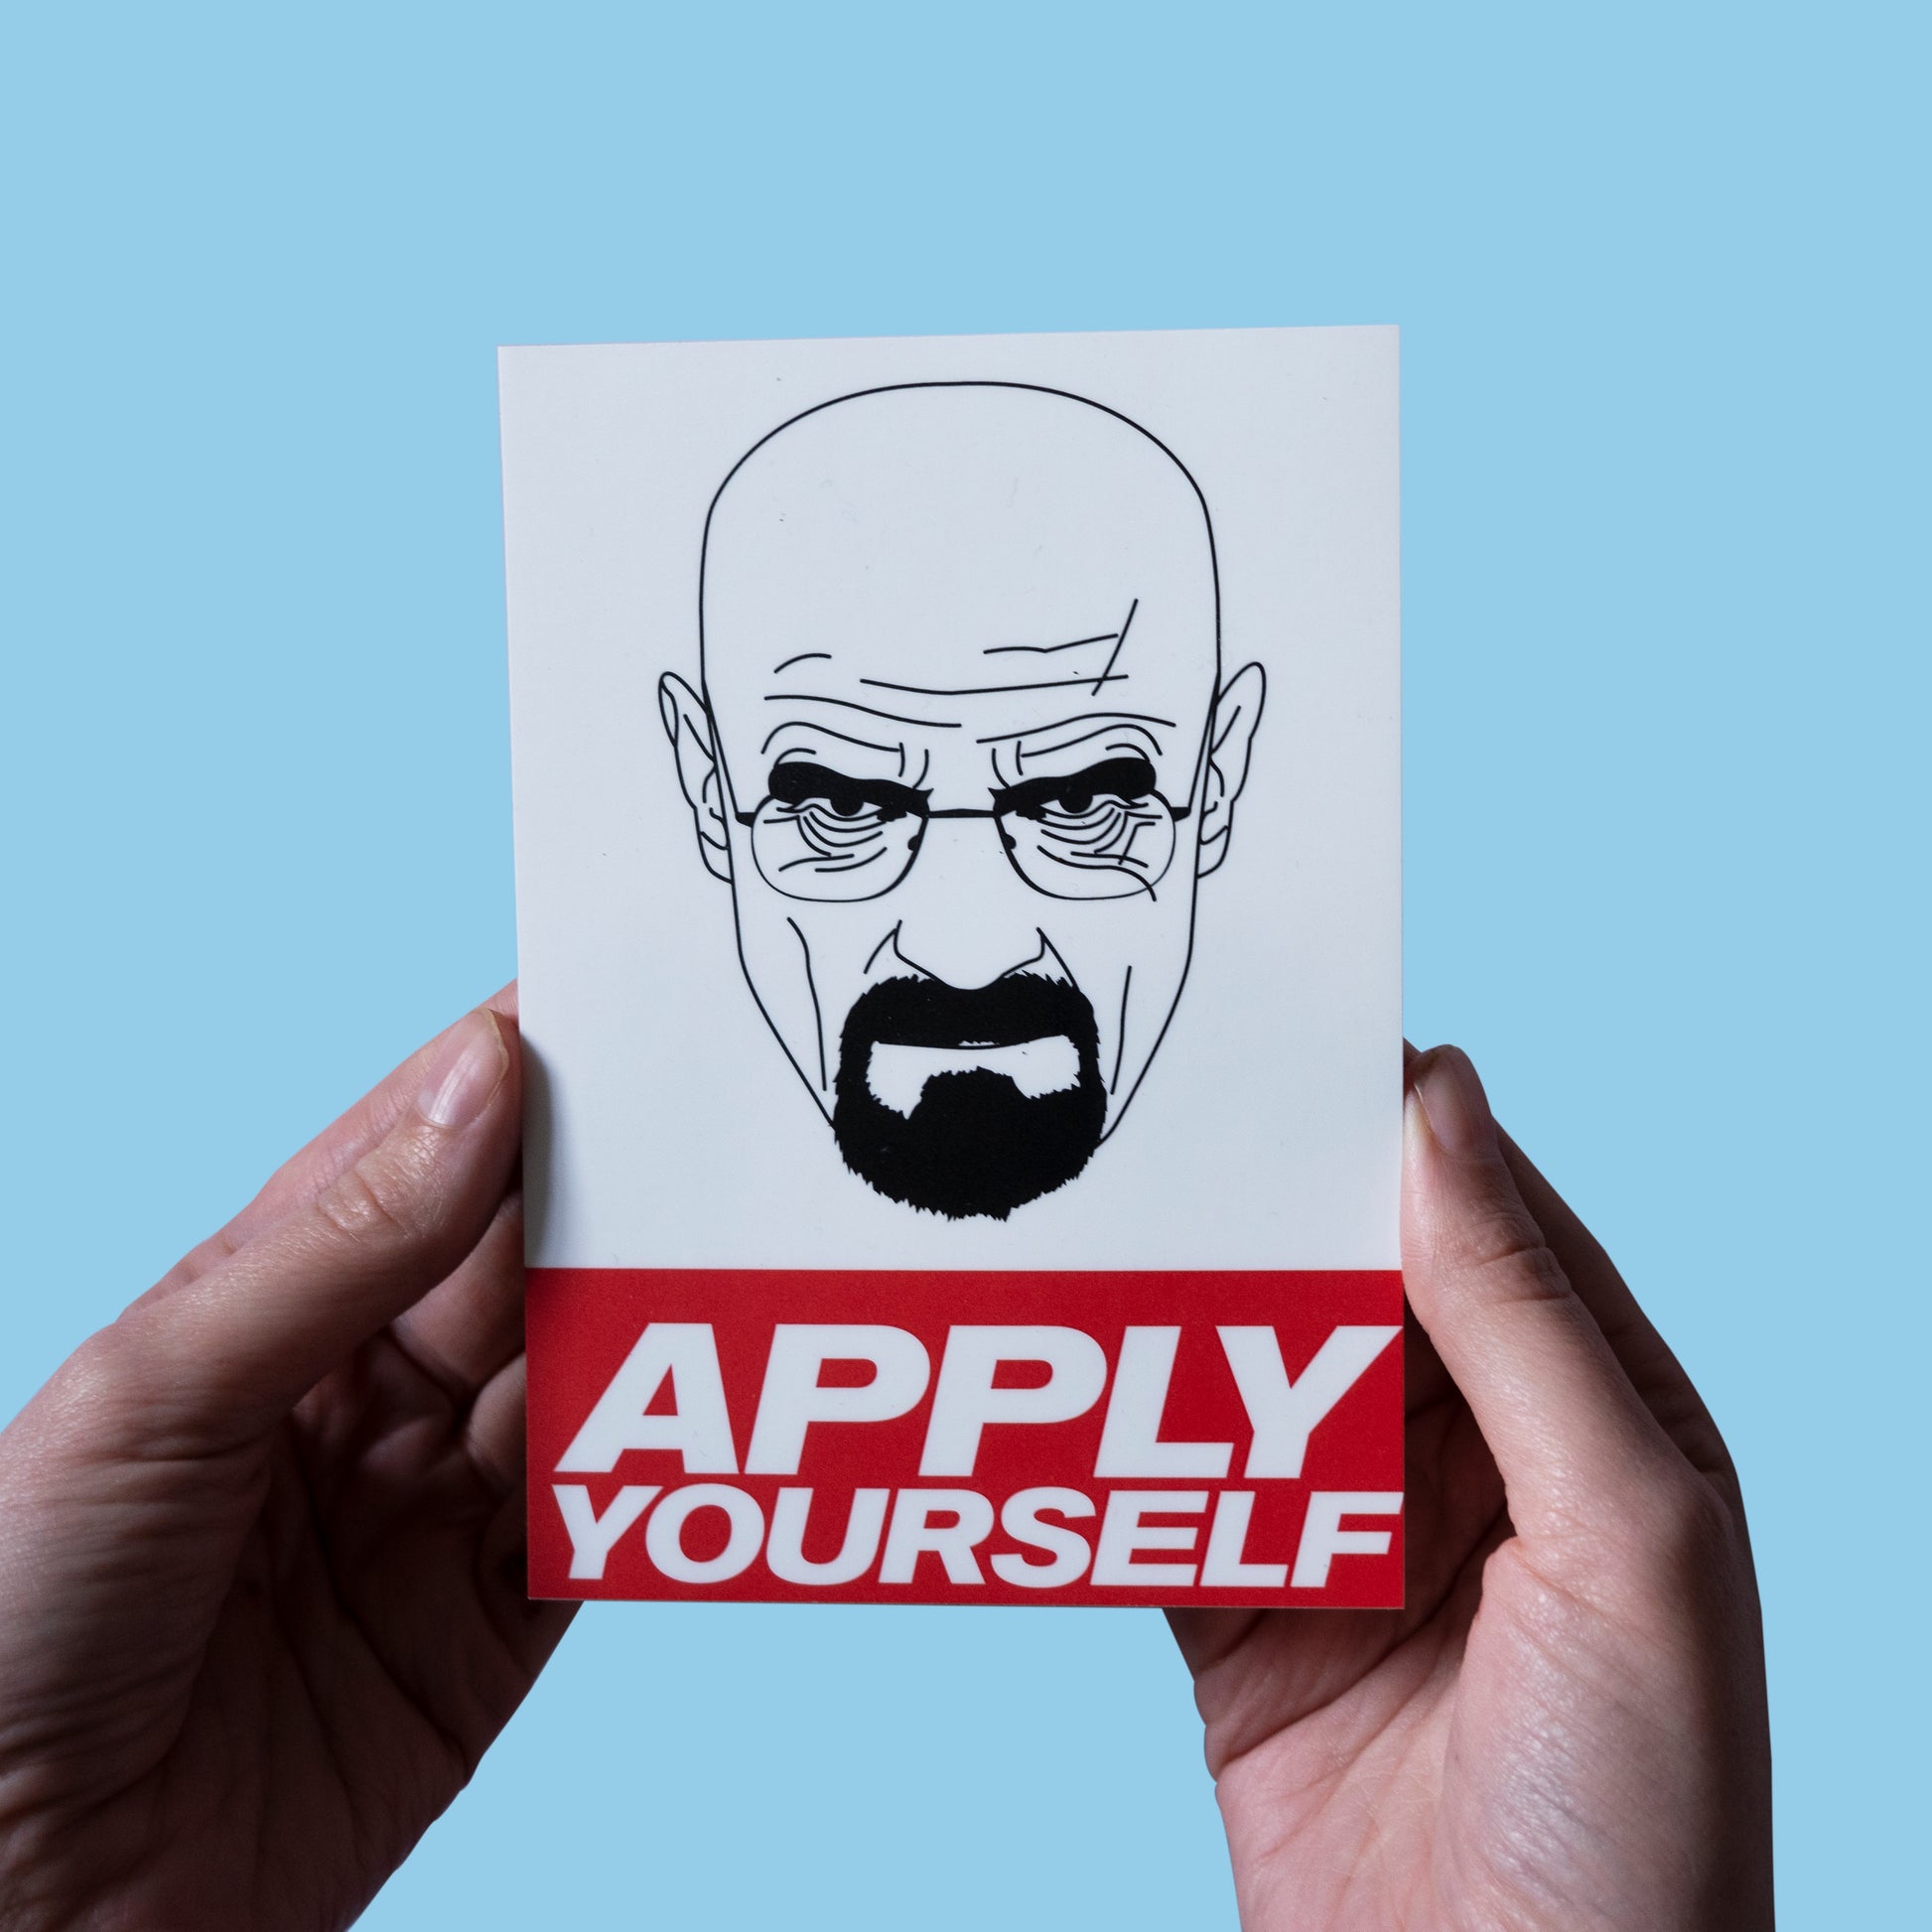 Walter White / Heisenberg quote sticker "APPLY YOURSELF"